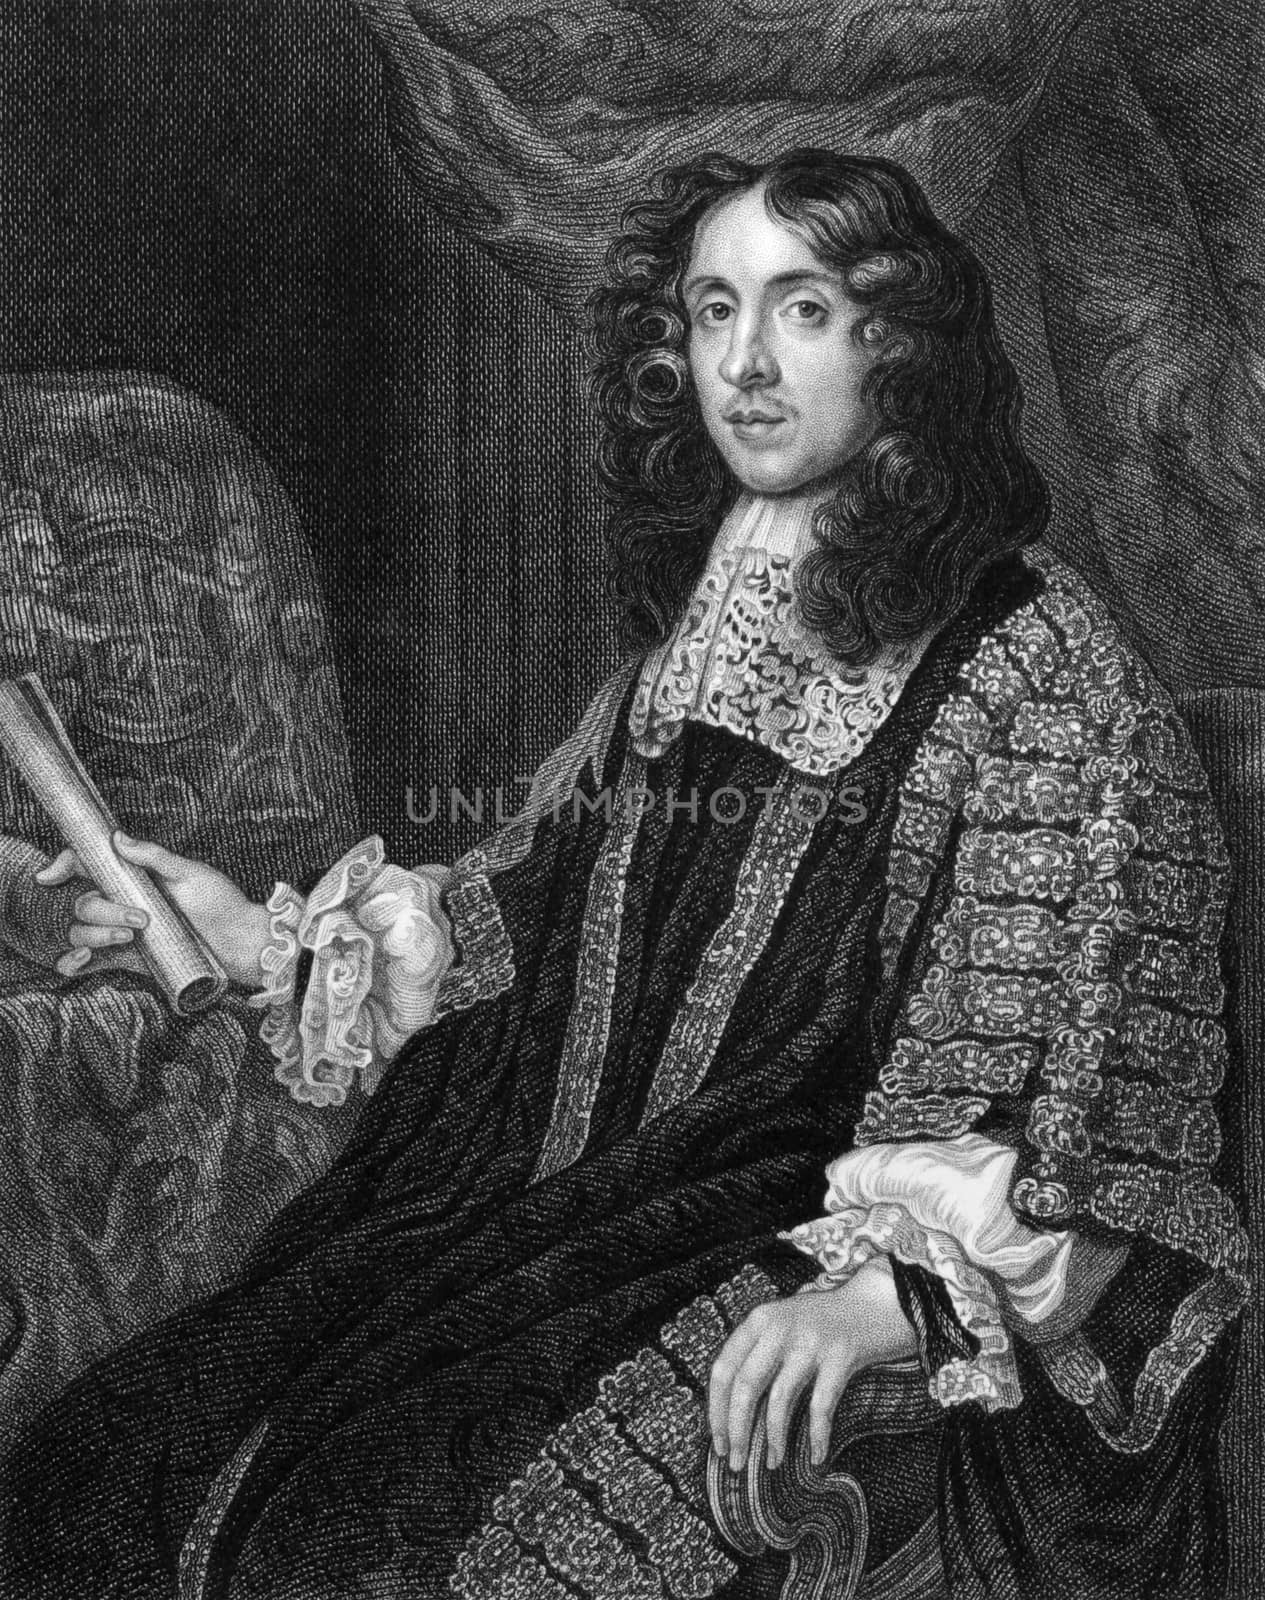 Heneage Finch, 1st Earl of Nottingham by Georgios